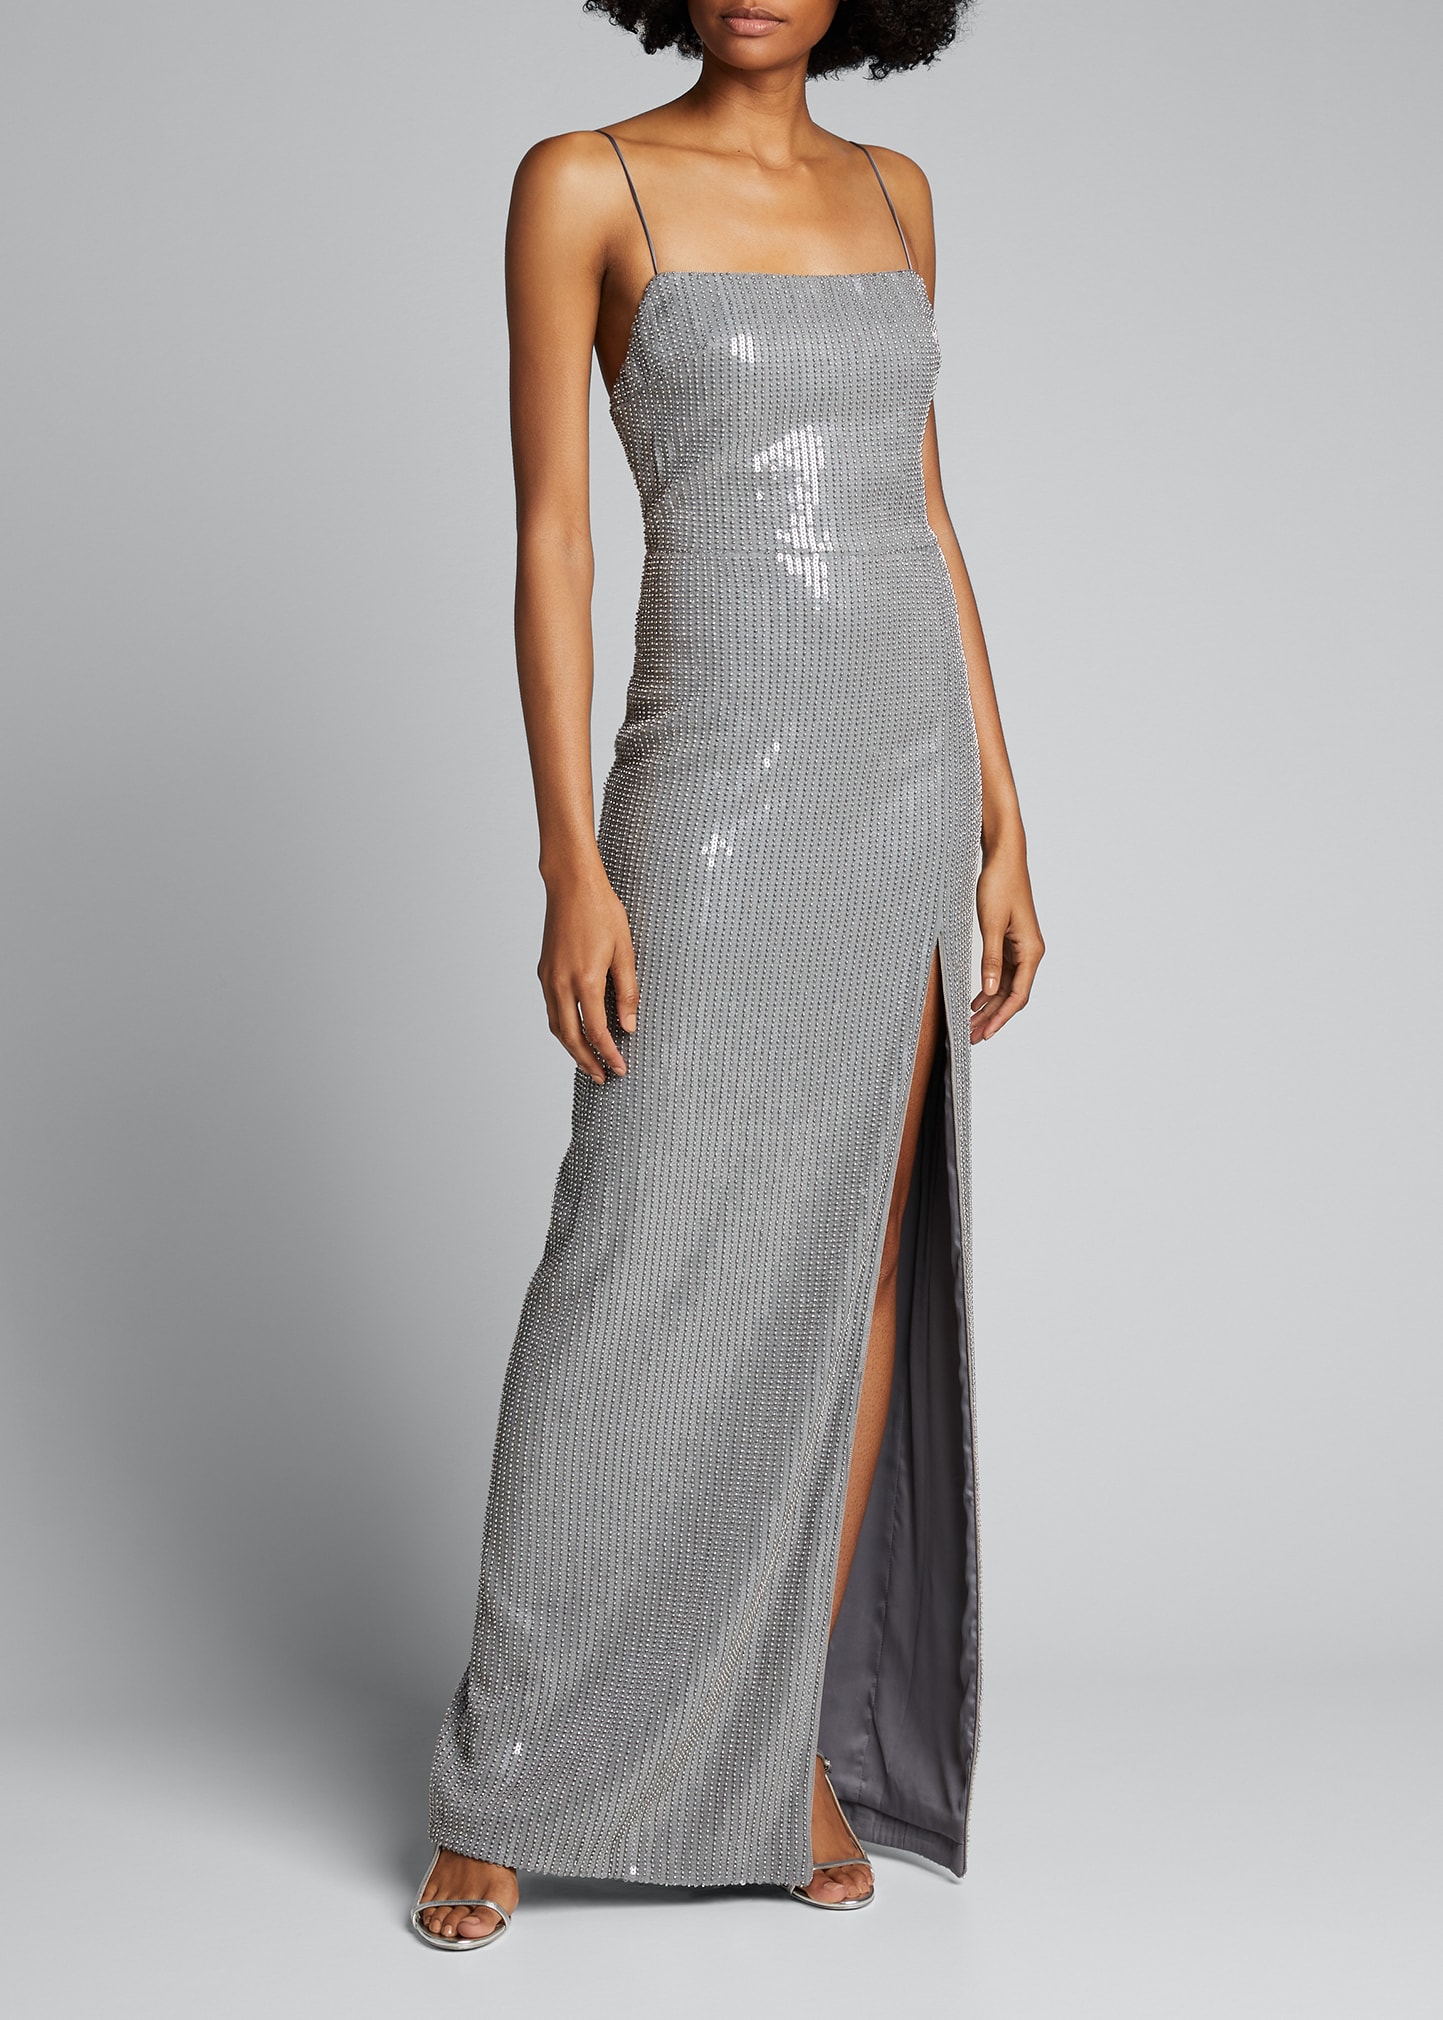 silver slip gown